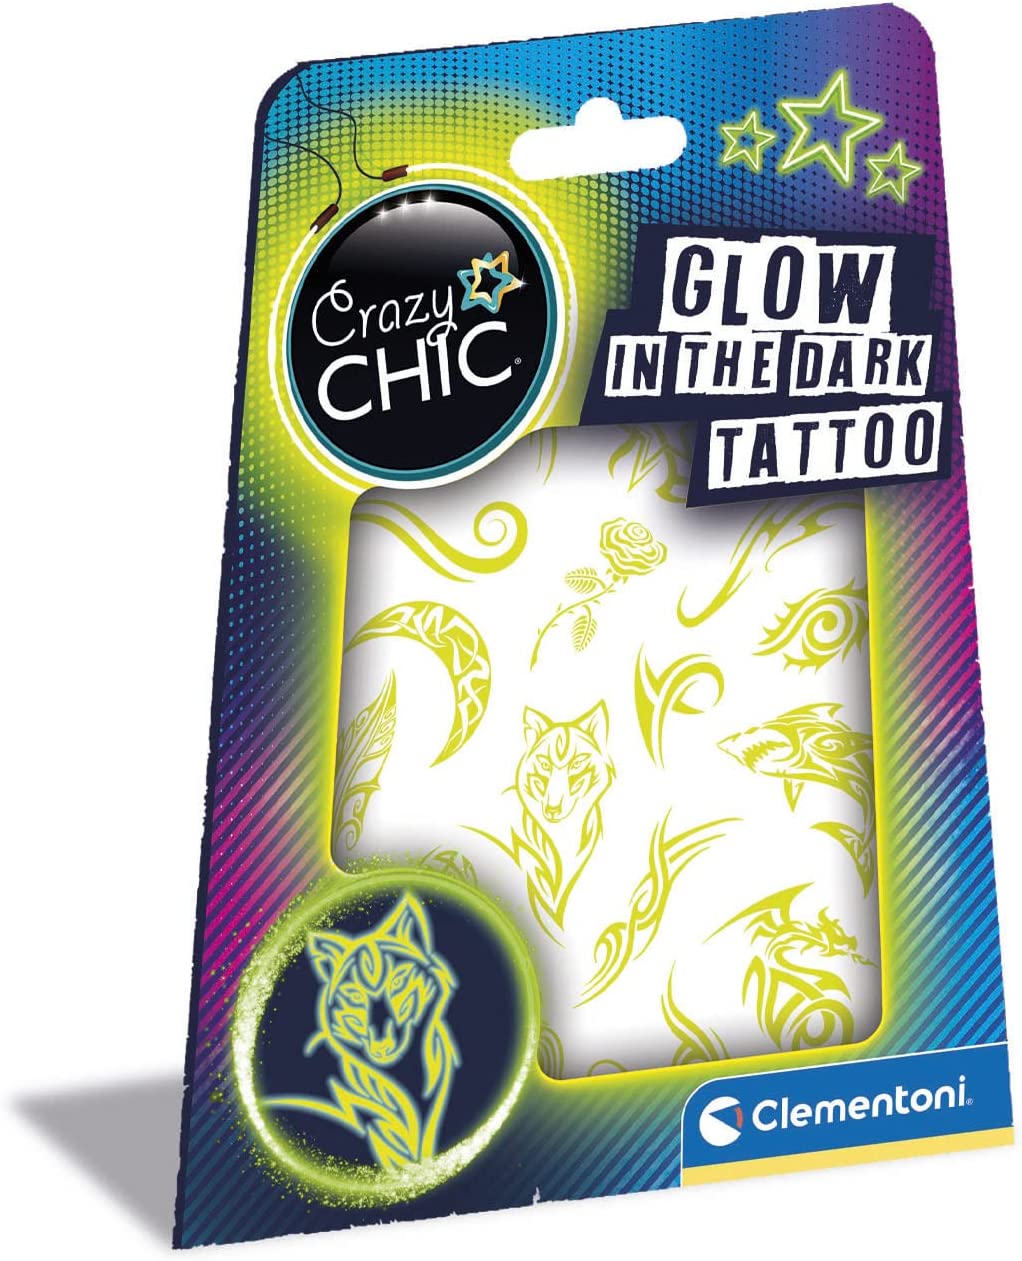 Clementoni - Crazy Chic - Glow In The Dark Tattoo - tatuaggi fluorescenti, kit  tatuaggi temporanei bambini - CL18687